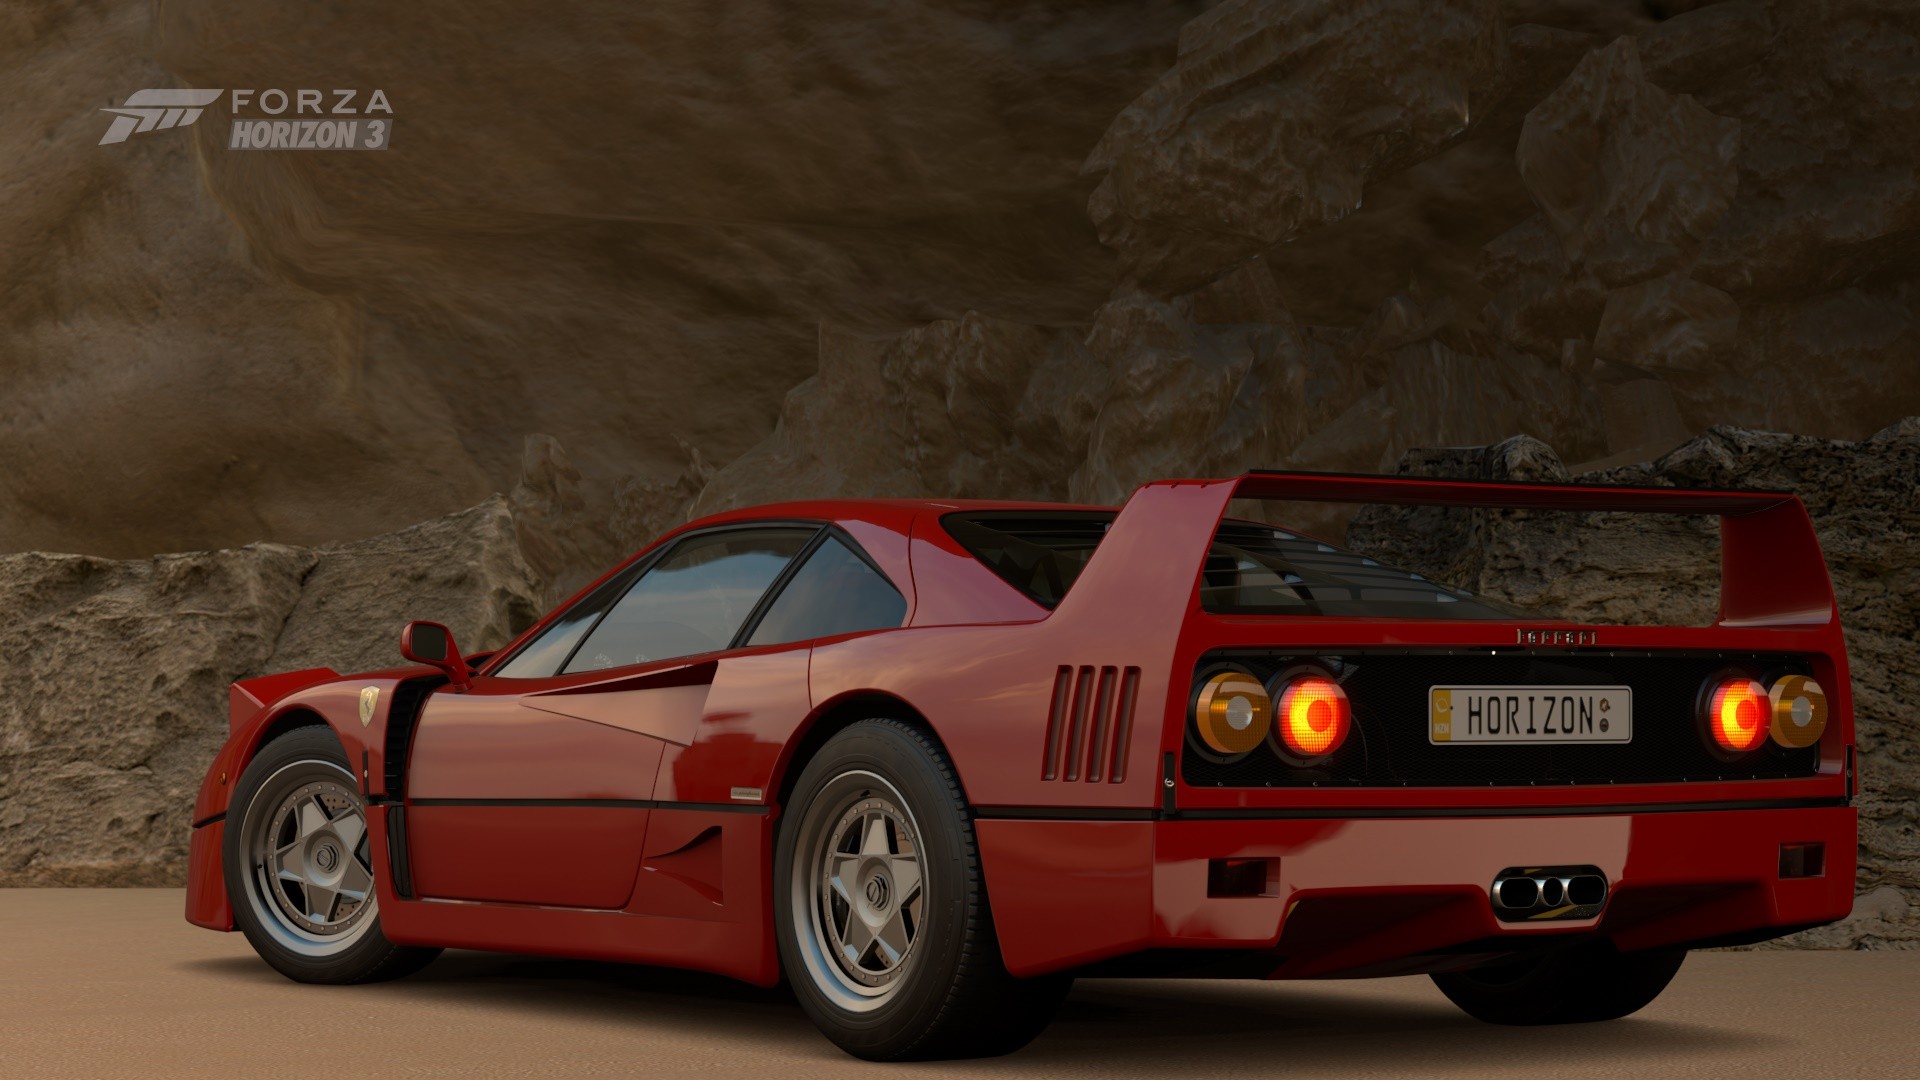 General 1920x1080 Forza Horizon 3 video games Ferrari F40 pop-up headlights Ferrari car red cars vehicle